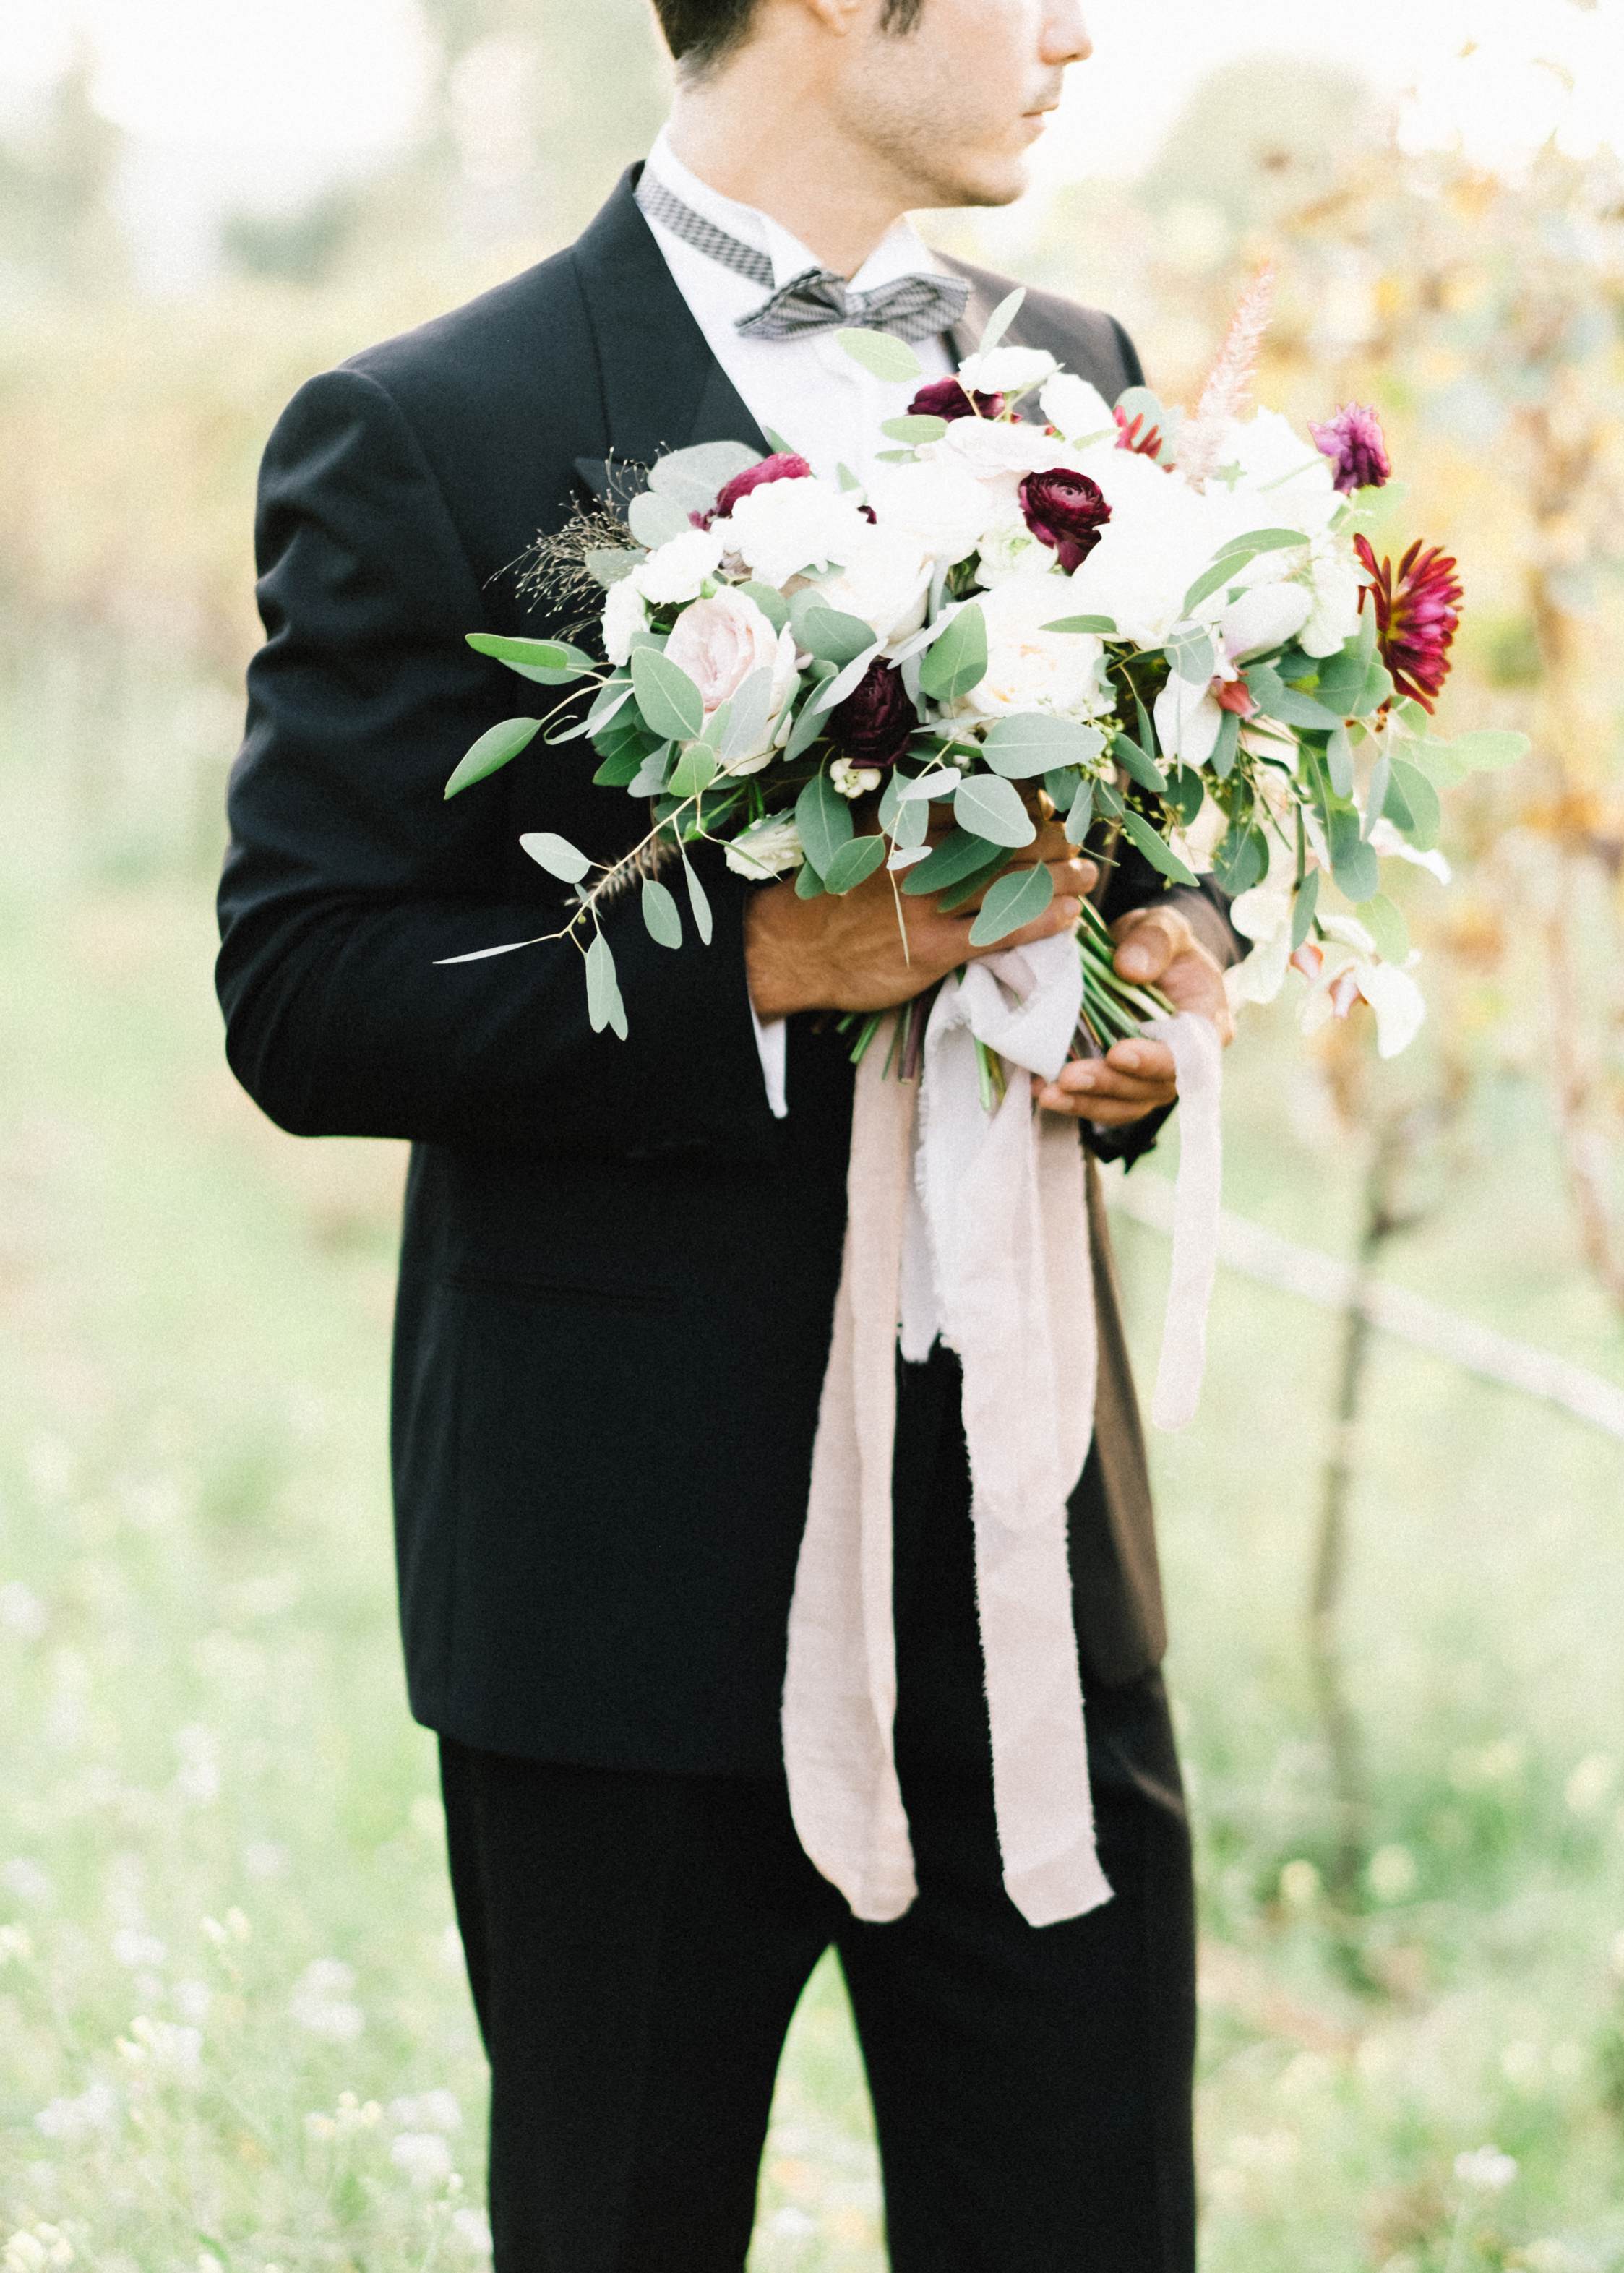 Wedding photographer Masseria Montenapoleone Italy - Groom with bridal bouquet